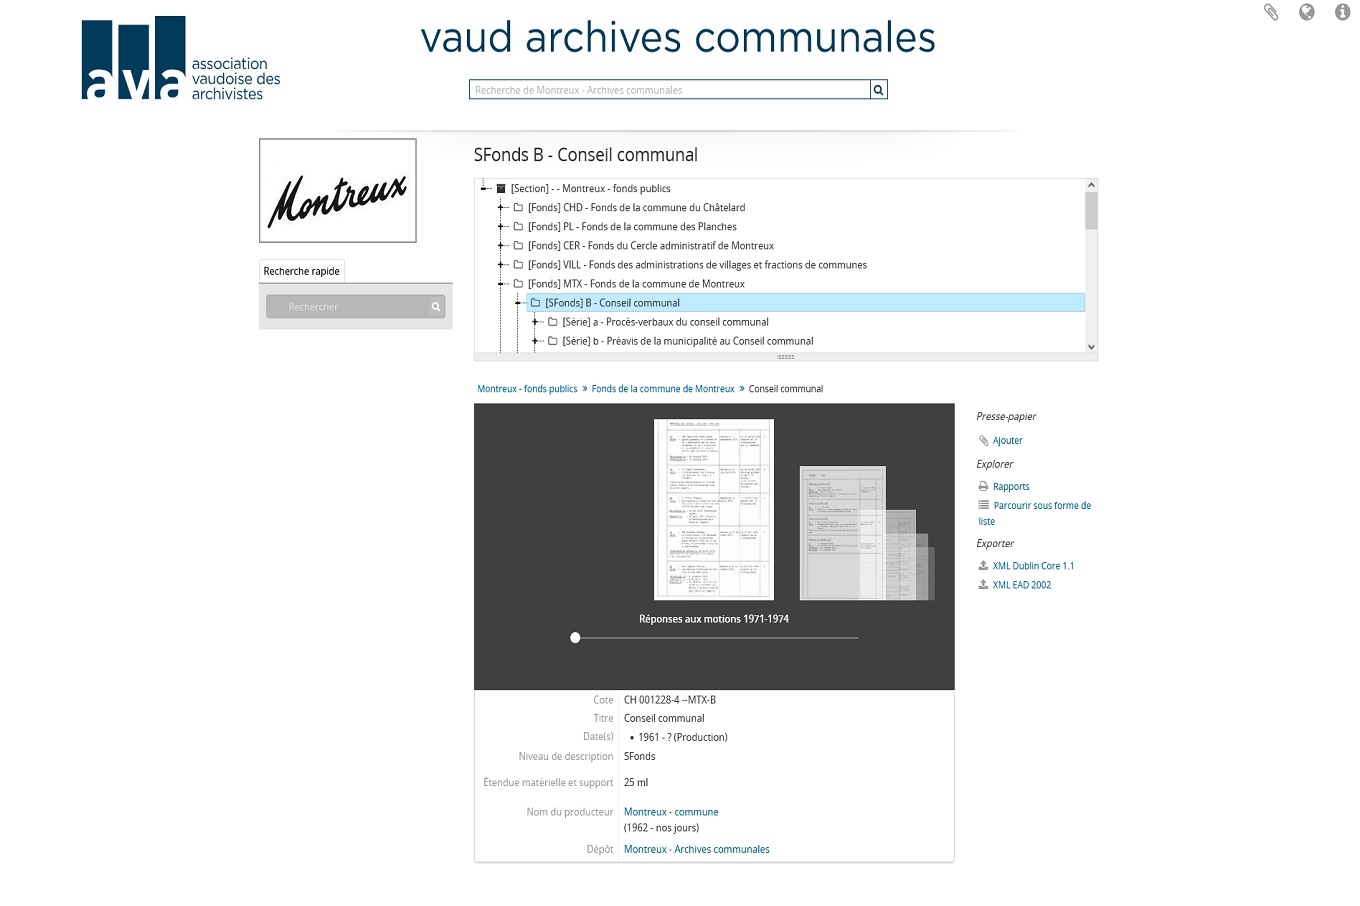 www.vaud.archivescommunales.ch